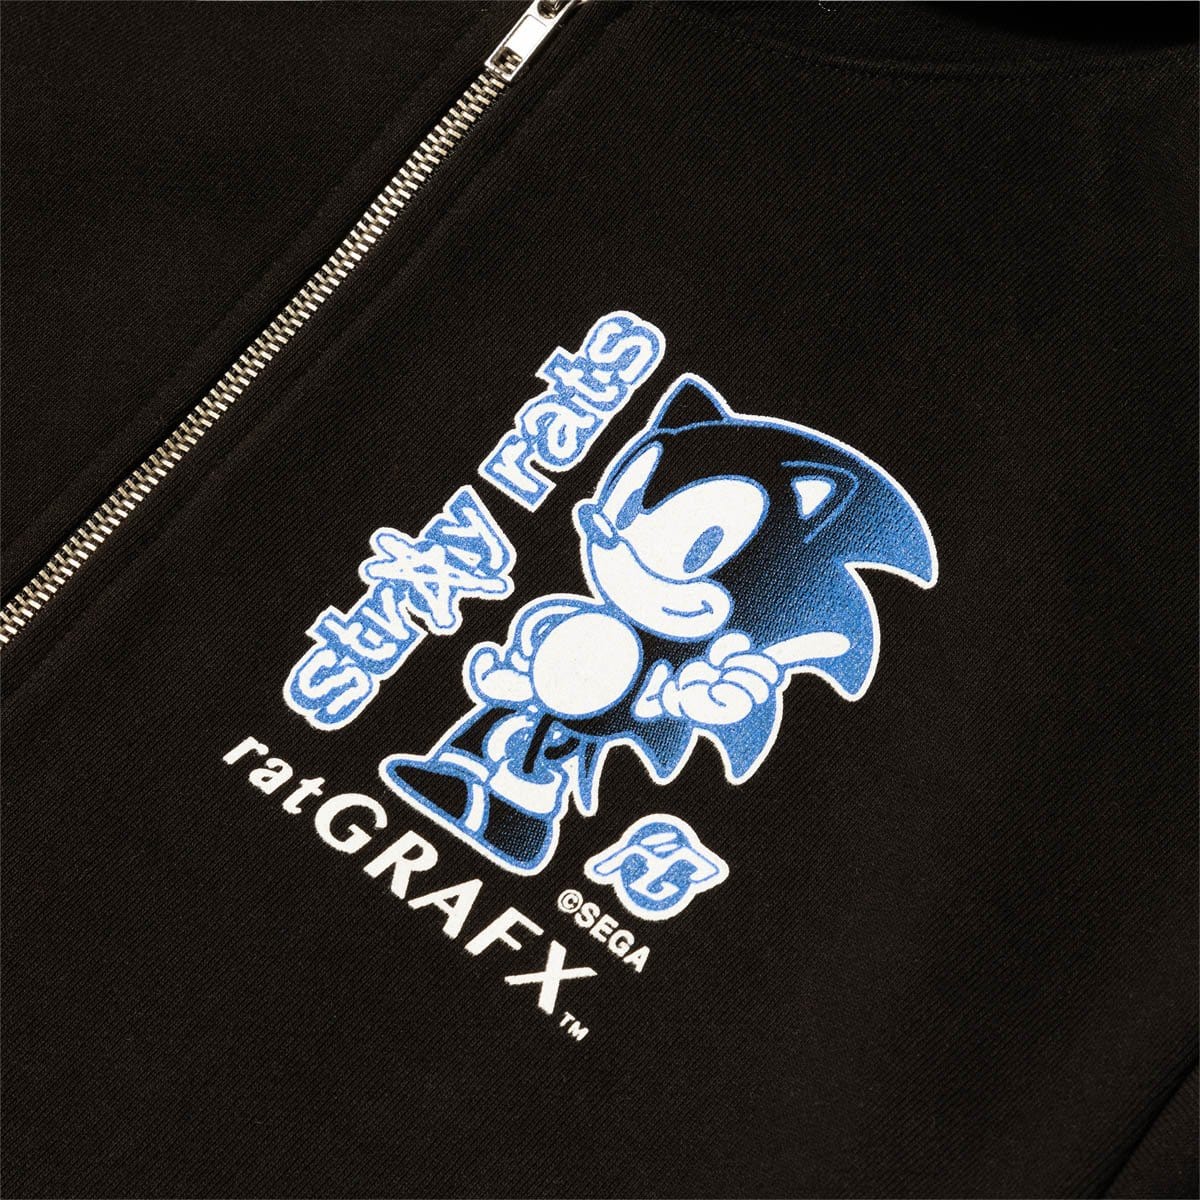 Stray Rats Hoodies & Sweatshirts x Sonic the Hedgehog SONIC ORBIT ZIPPED HOODIE